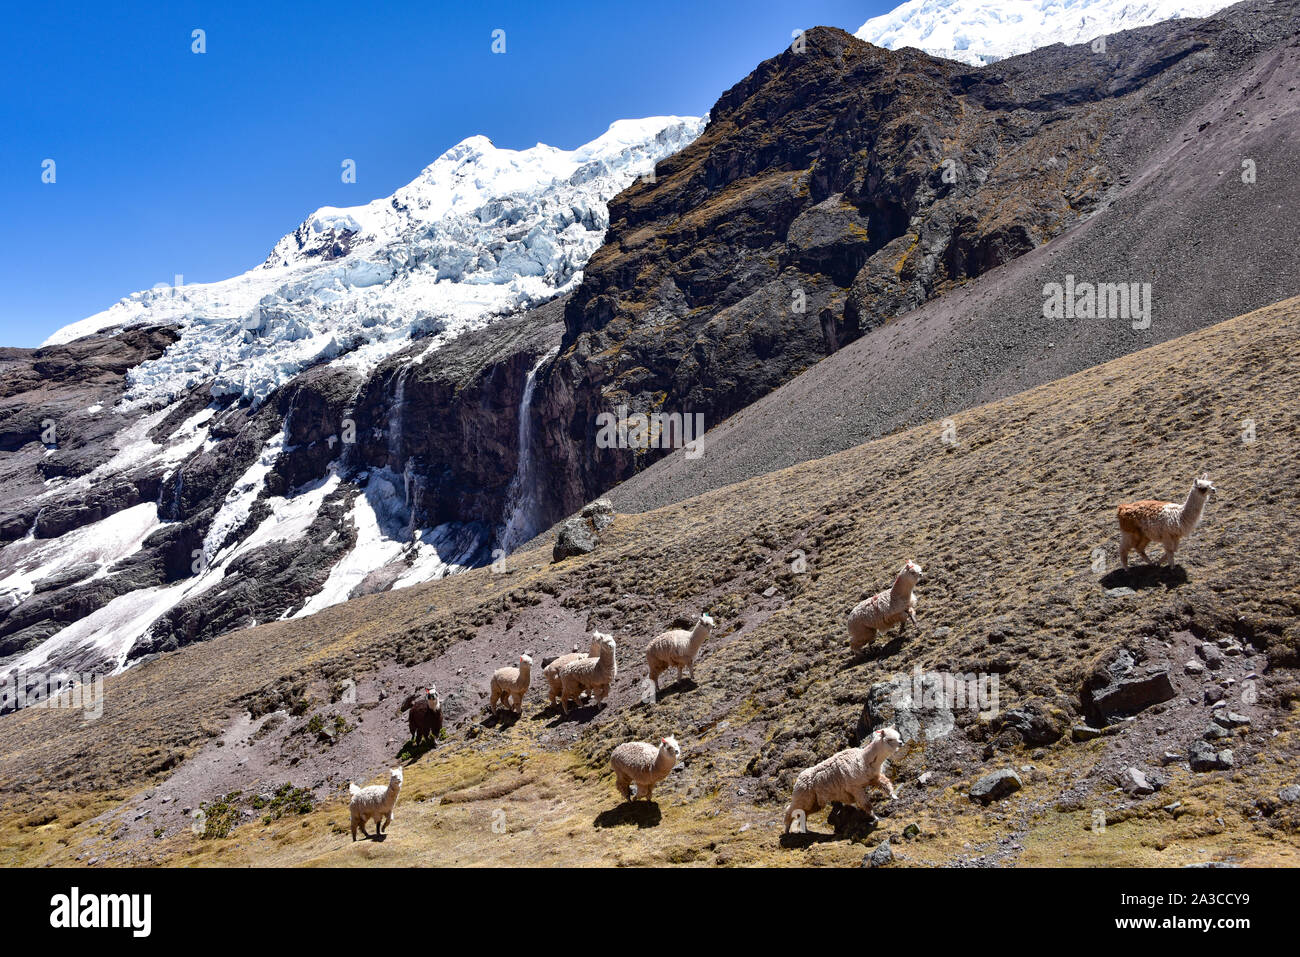 Llamas on a mountain slope close to the Ausangate Glacier. Cordillera Vilcanota, Cusco, Peru Stock Photo